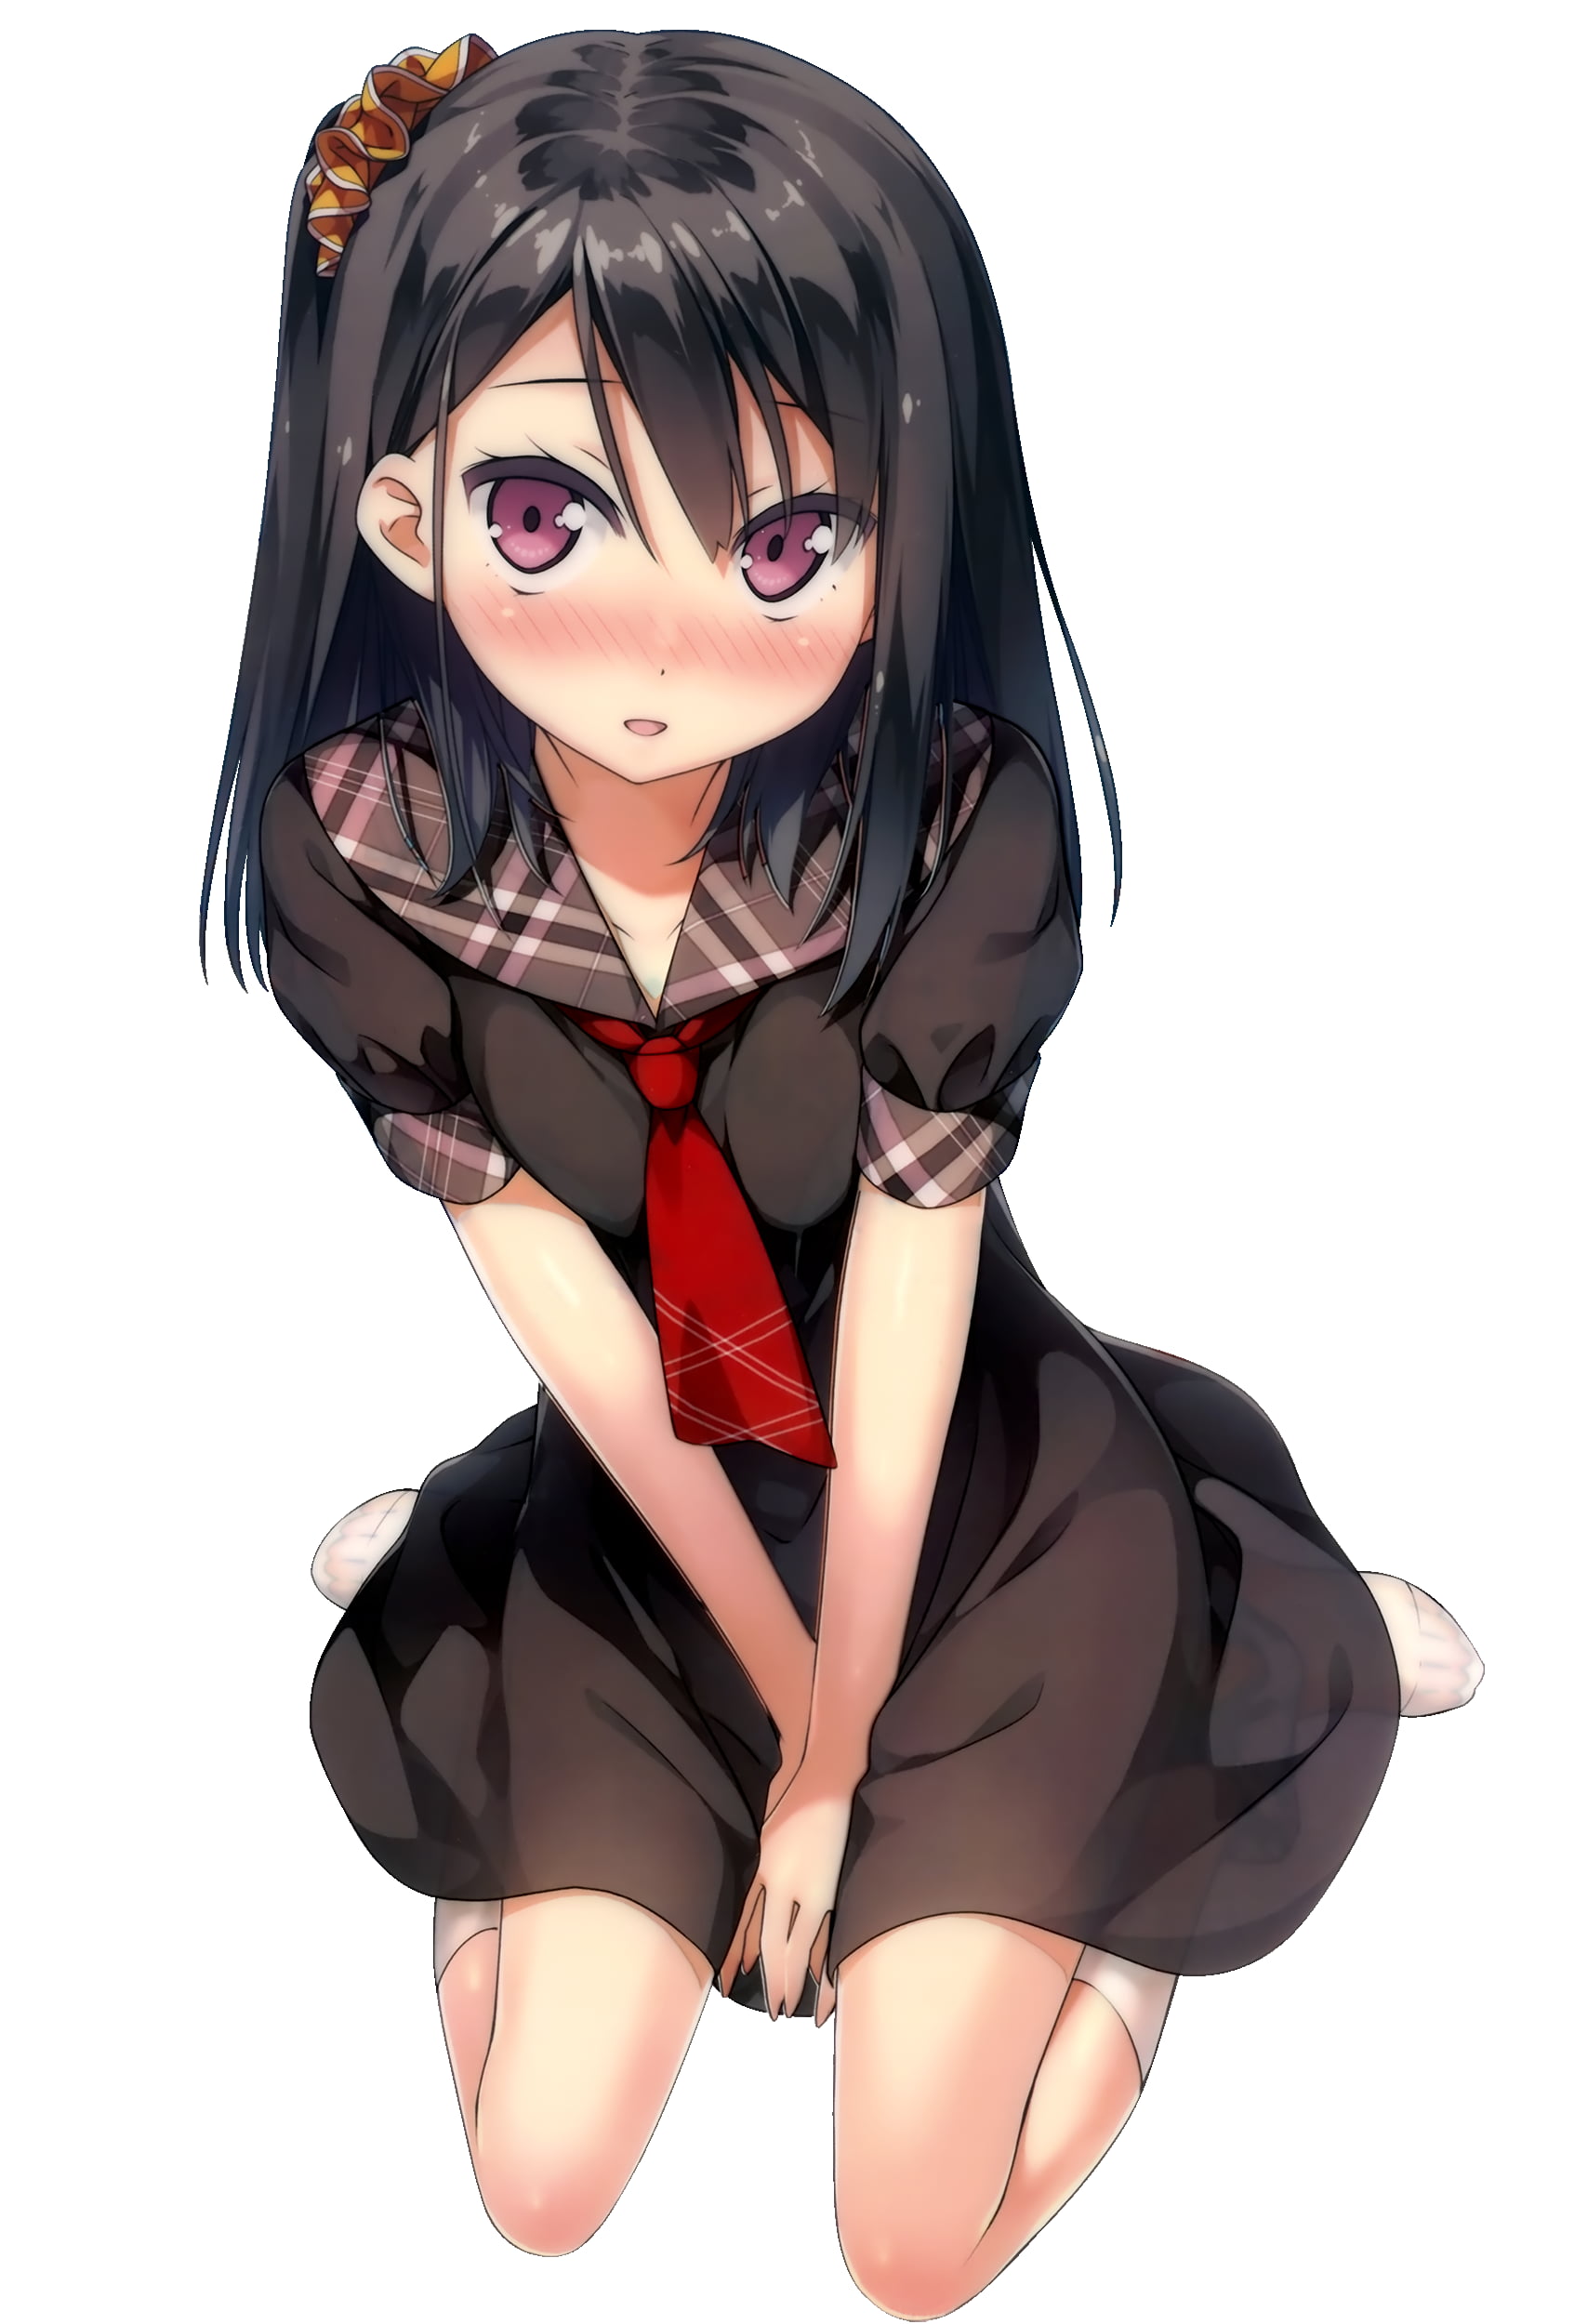 female anime character sitting on floor